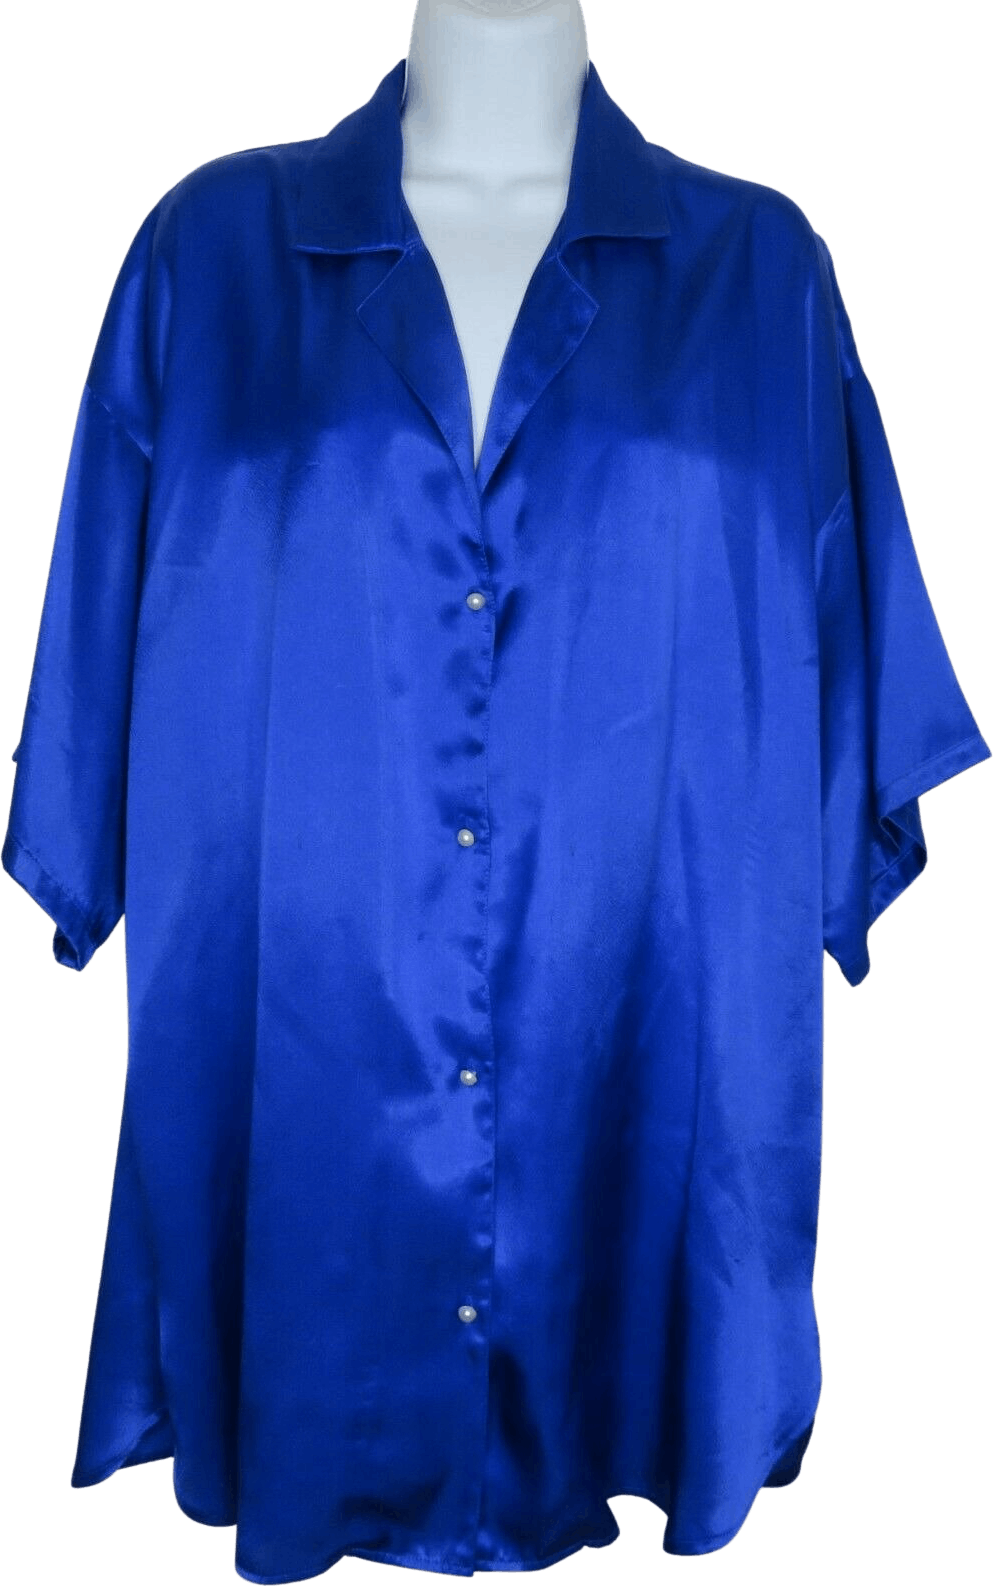 Vintage Blue Pajamas Sleep Shirt Nightgown by Victoria's Secret | Shop ...